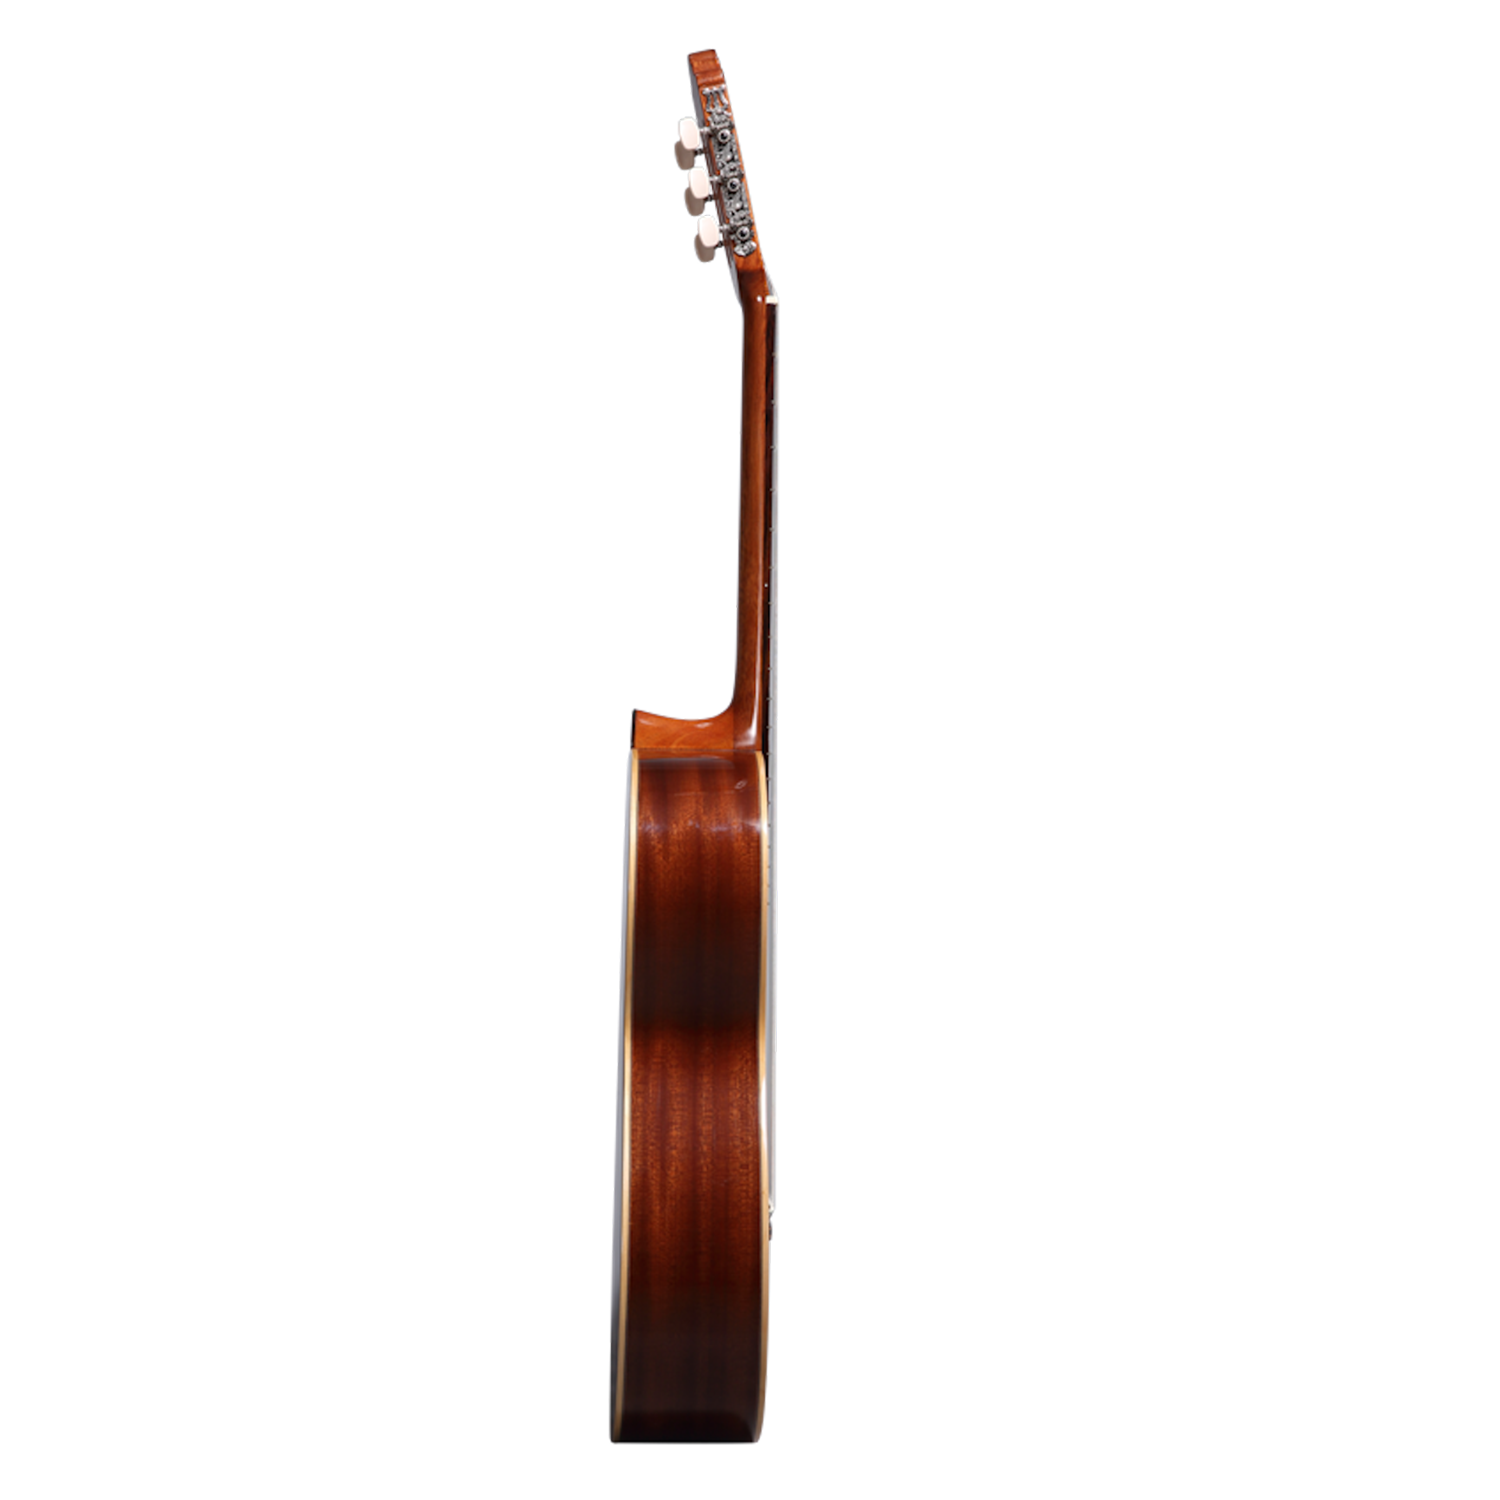 Altamira N100 3/4 Solid Cedar Top 3/4 Size Classical Guitar